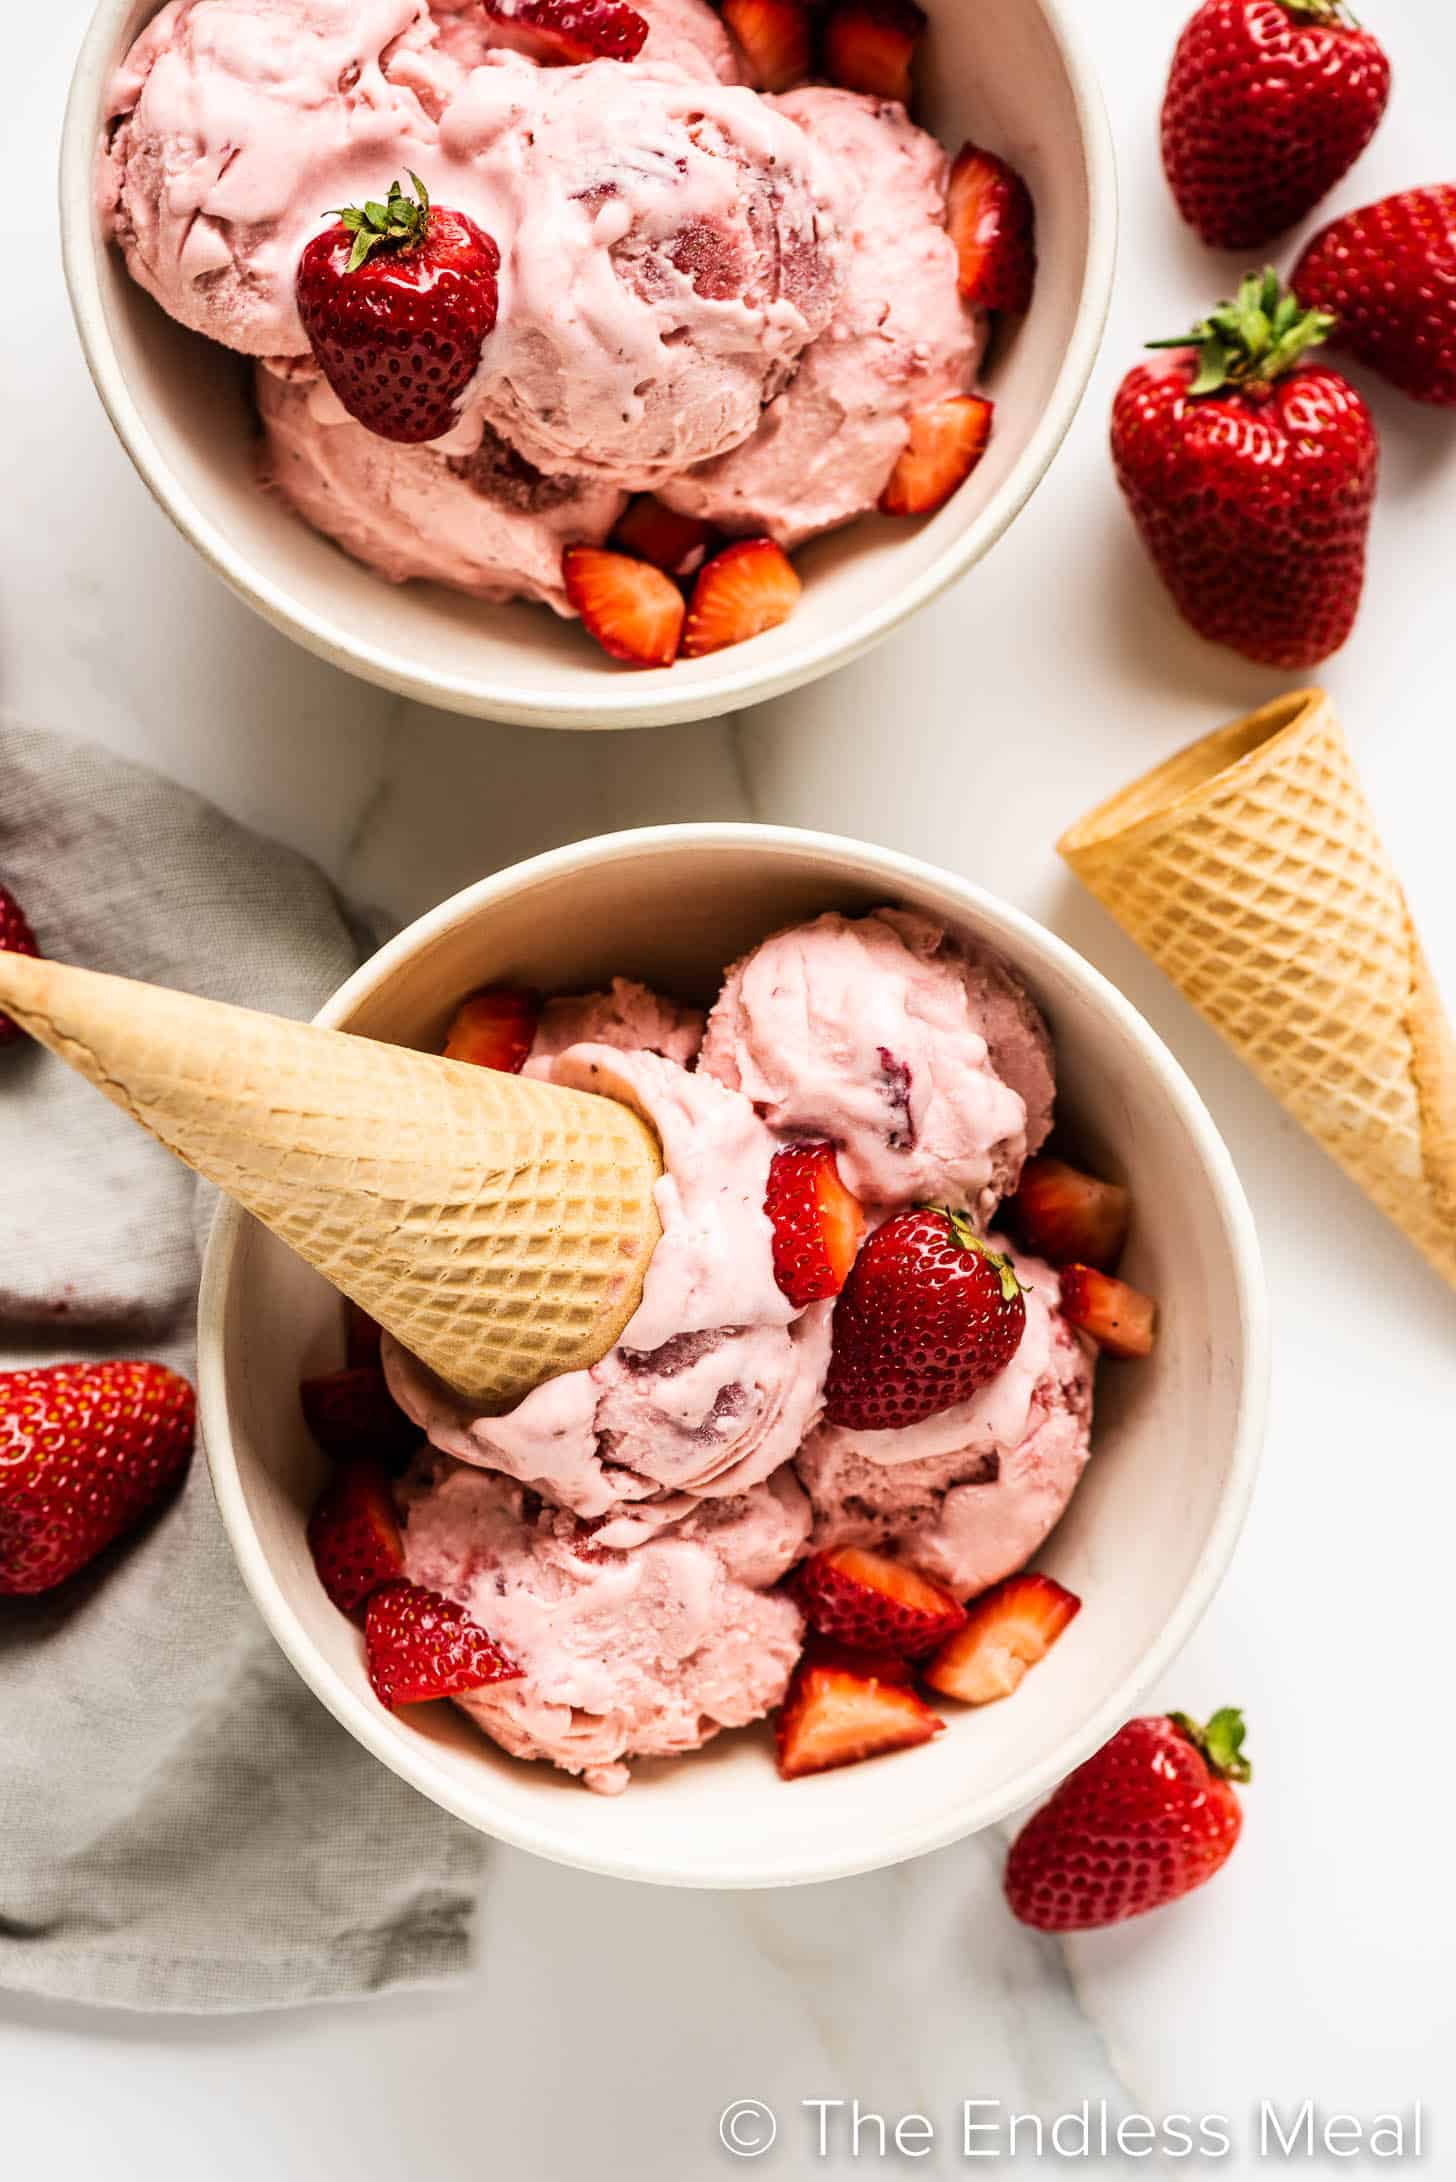 Homemade Ice Cream Recipes to Beat the Heat